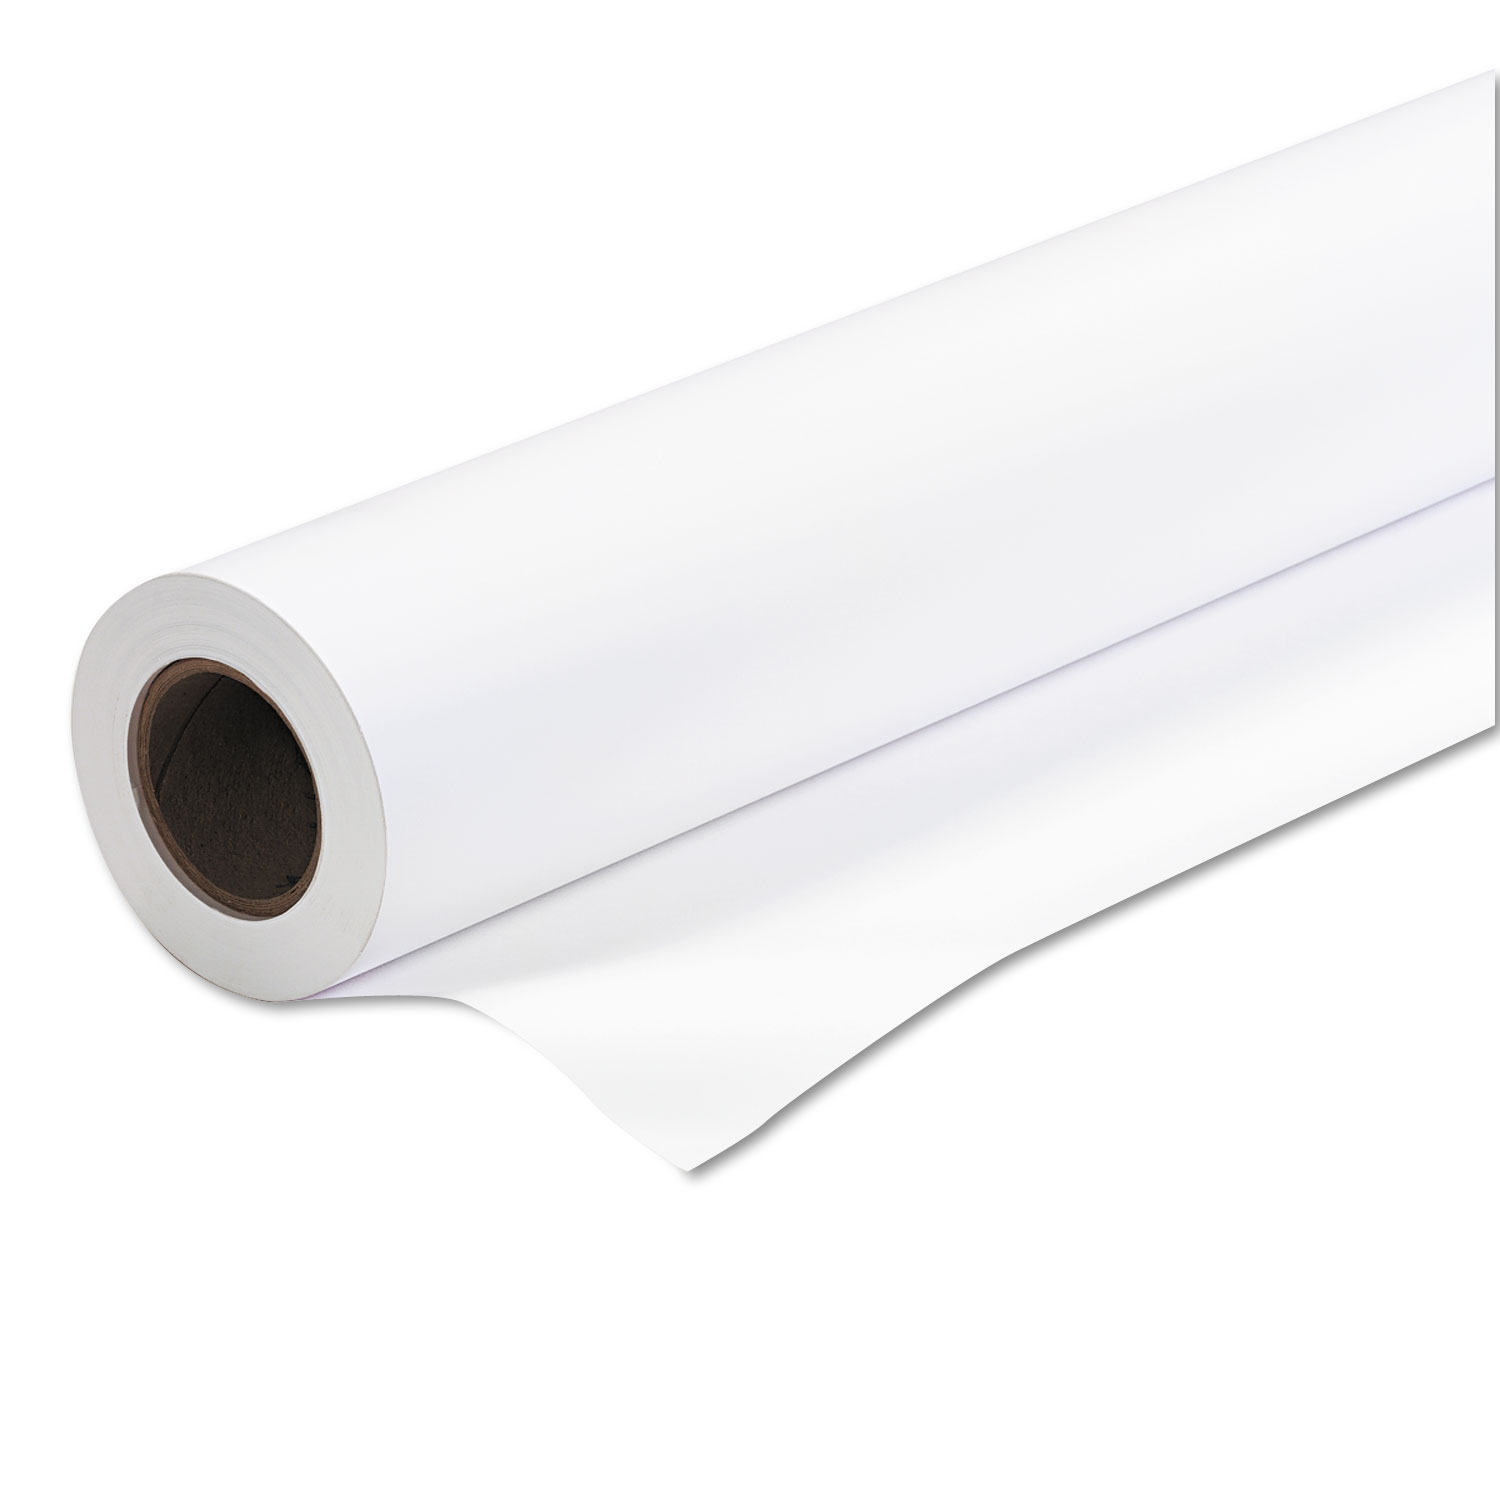  Iconex 45152 Amerigo Wide-Format Paper, 2 Core, 24 lb, 36 x 150 ft, Coated White (ICX90750211) 